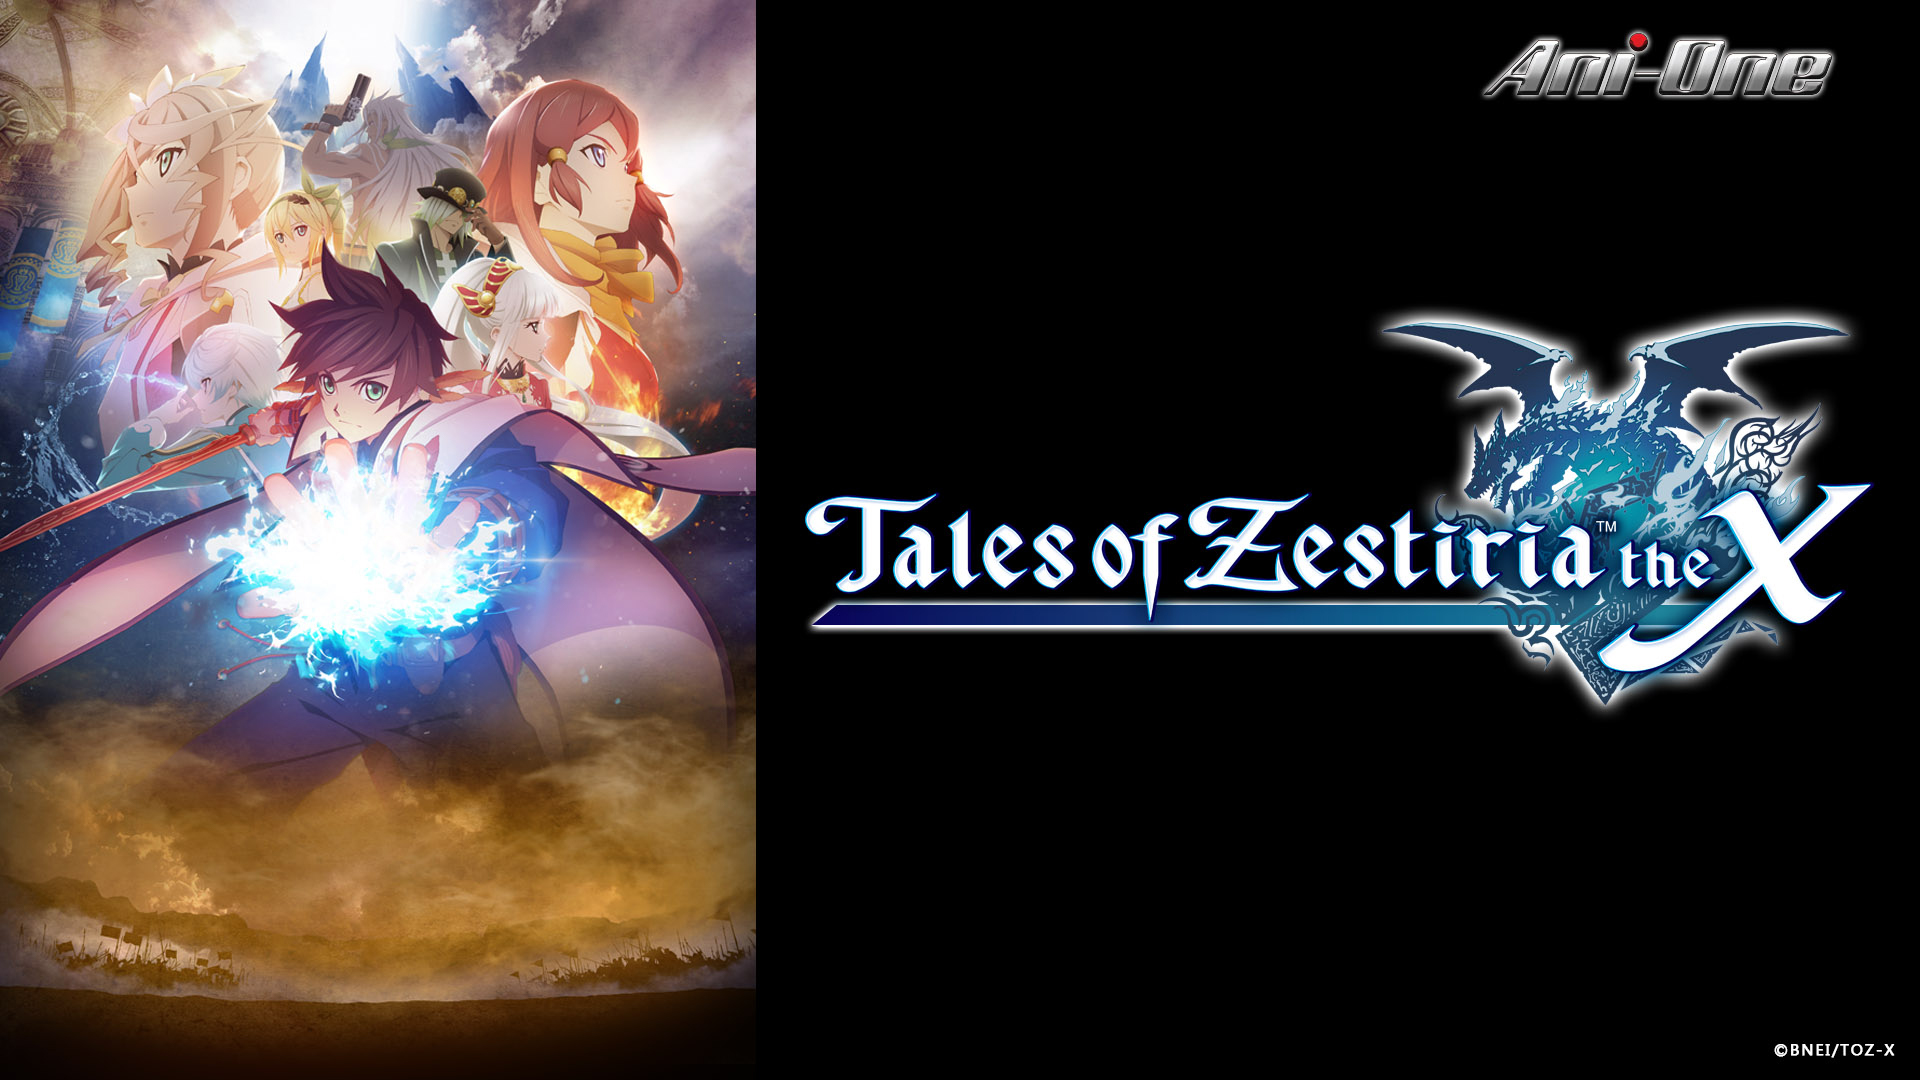 Episode 13, Tales of Zestiria The X S2